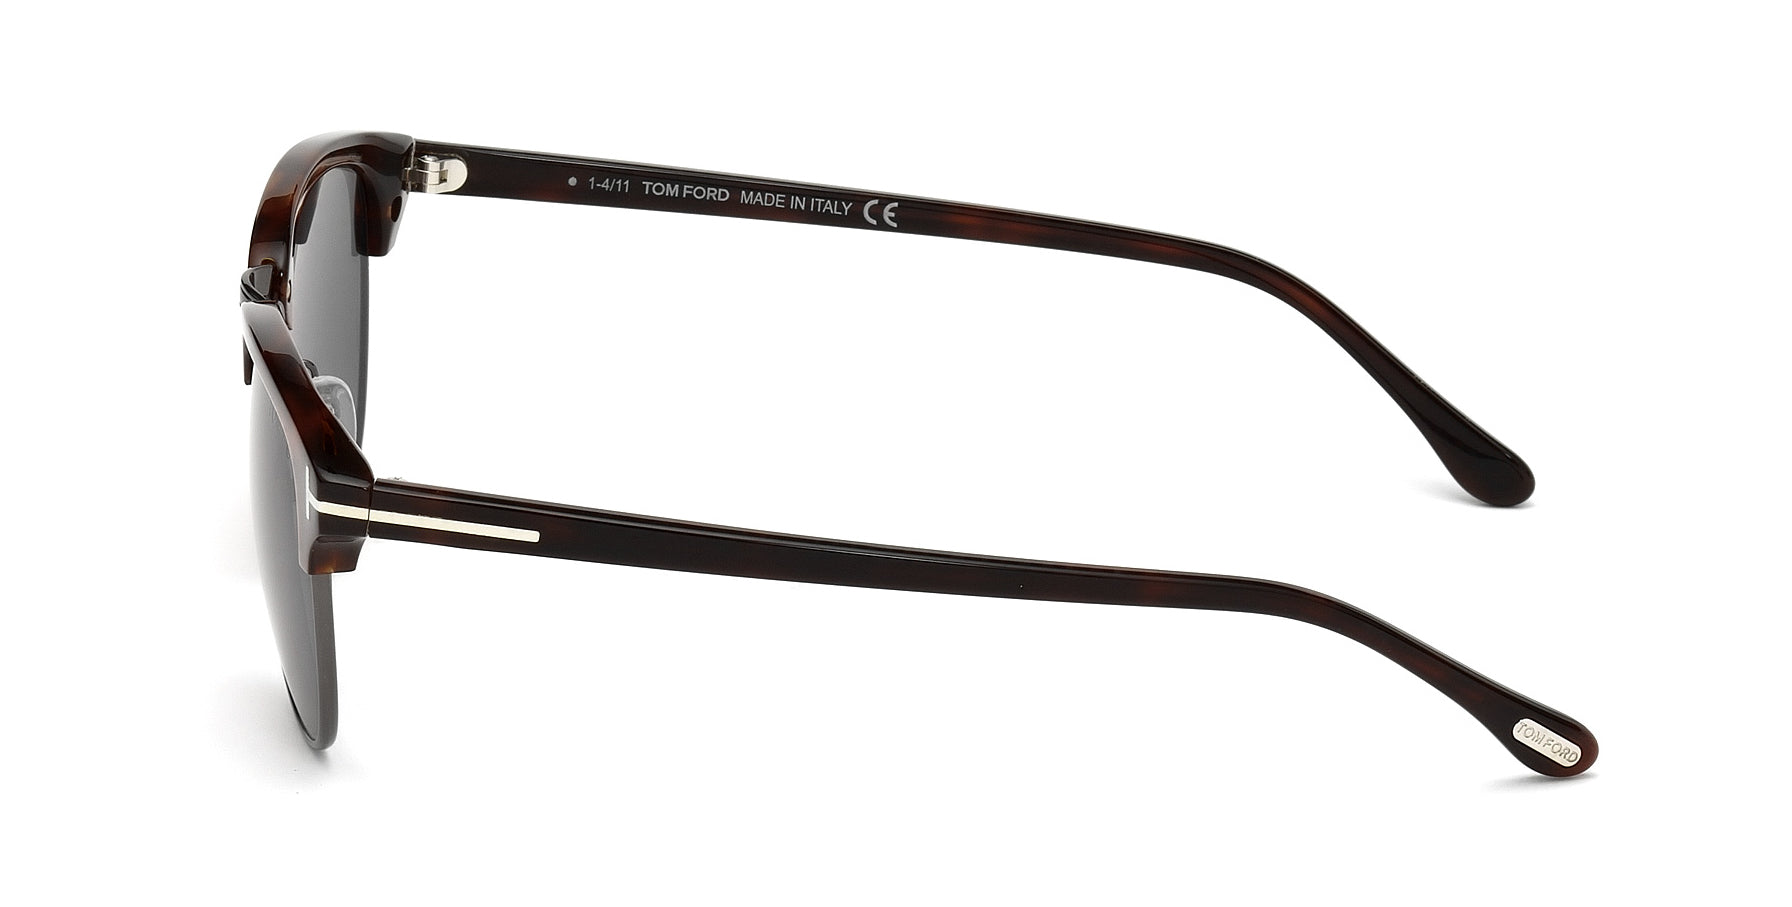 Tom Ford Henry TF248 Sunglasses | Fashion Eyewear